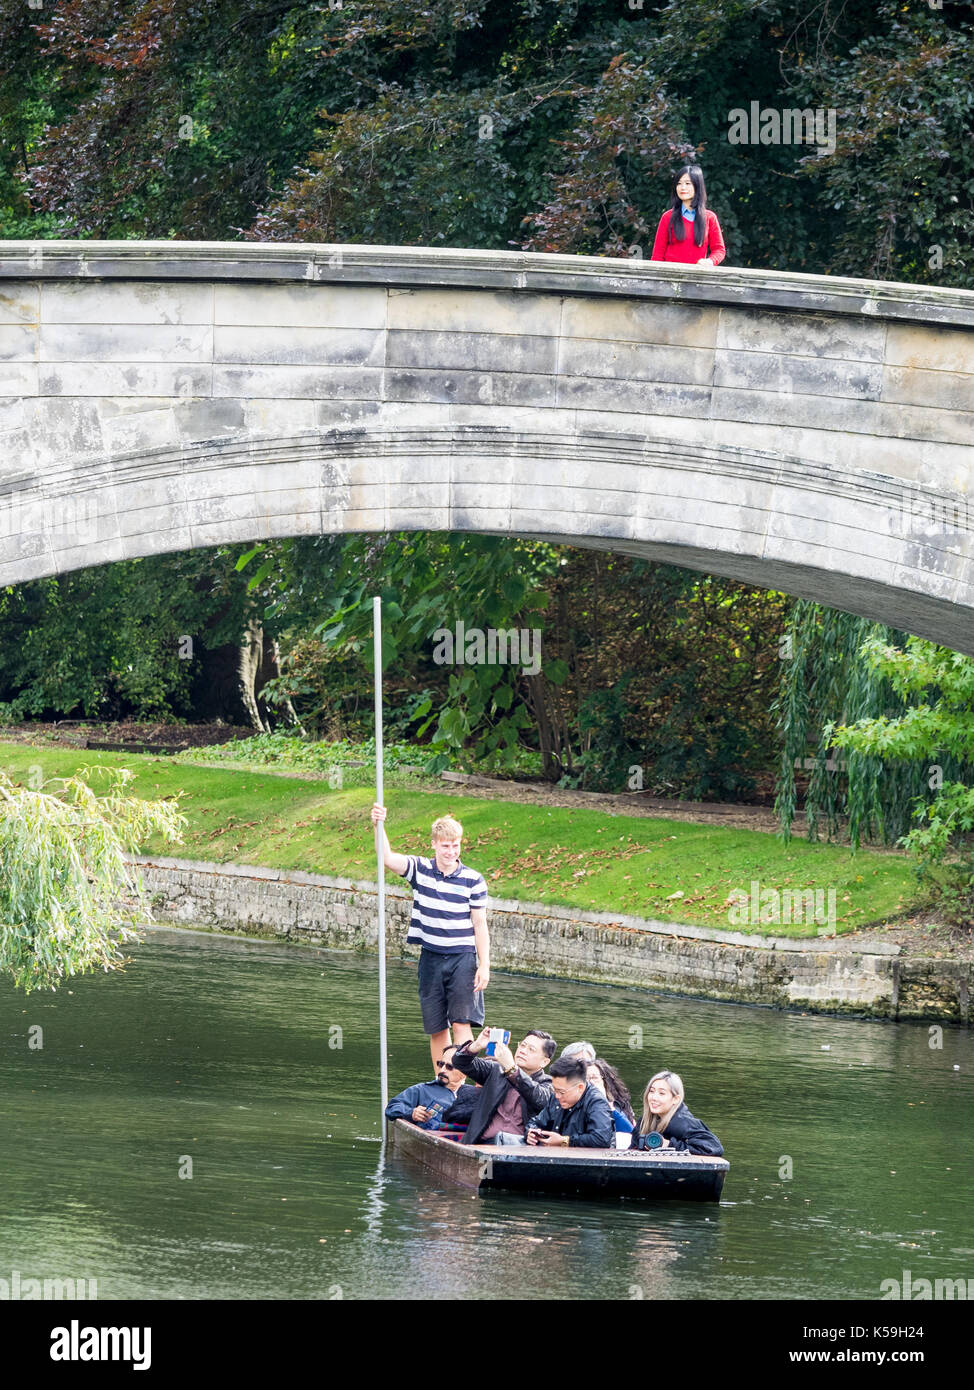 Cambridge - Tourists punt under a bridge in Kings College, University of Cambridge Stock Photo